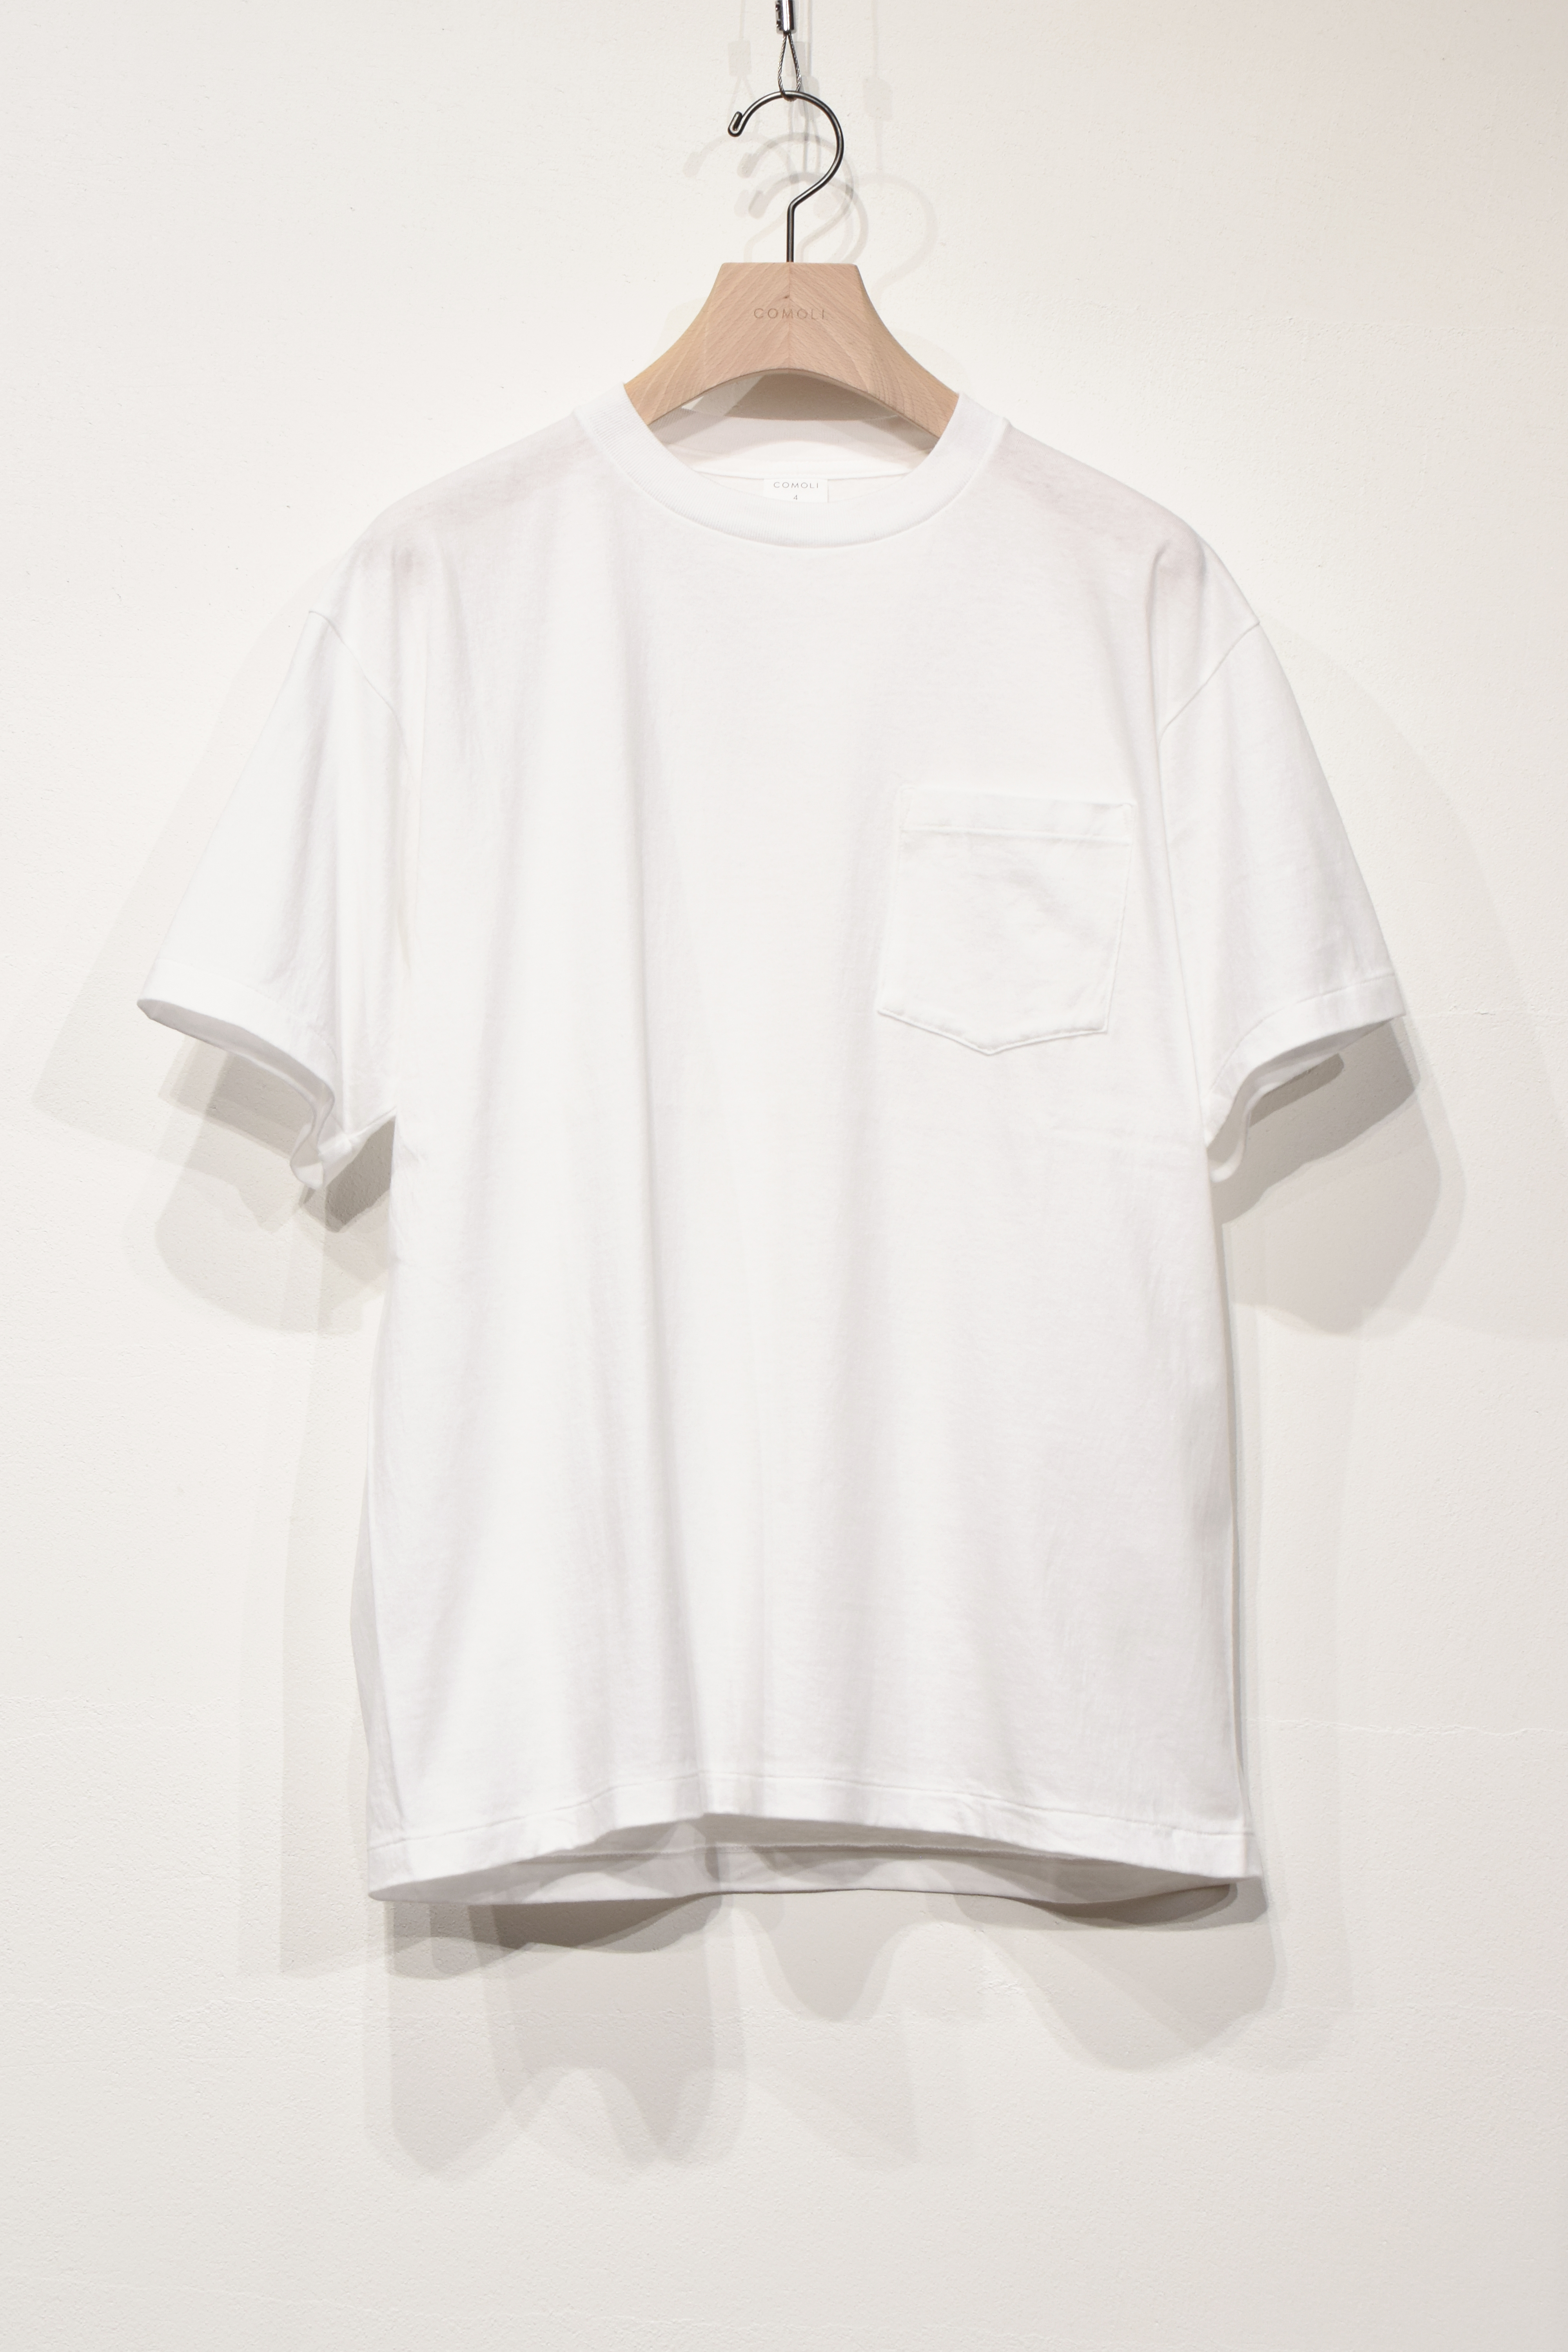 COMOLI (コモリ) / SURPLUS Tシャツ #X01-05015(1)